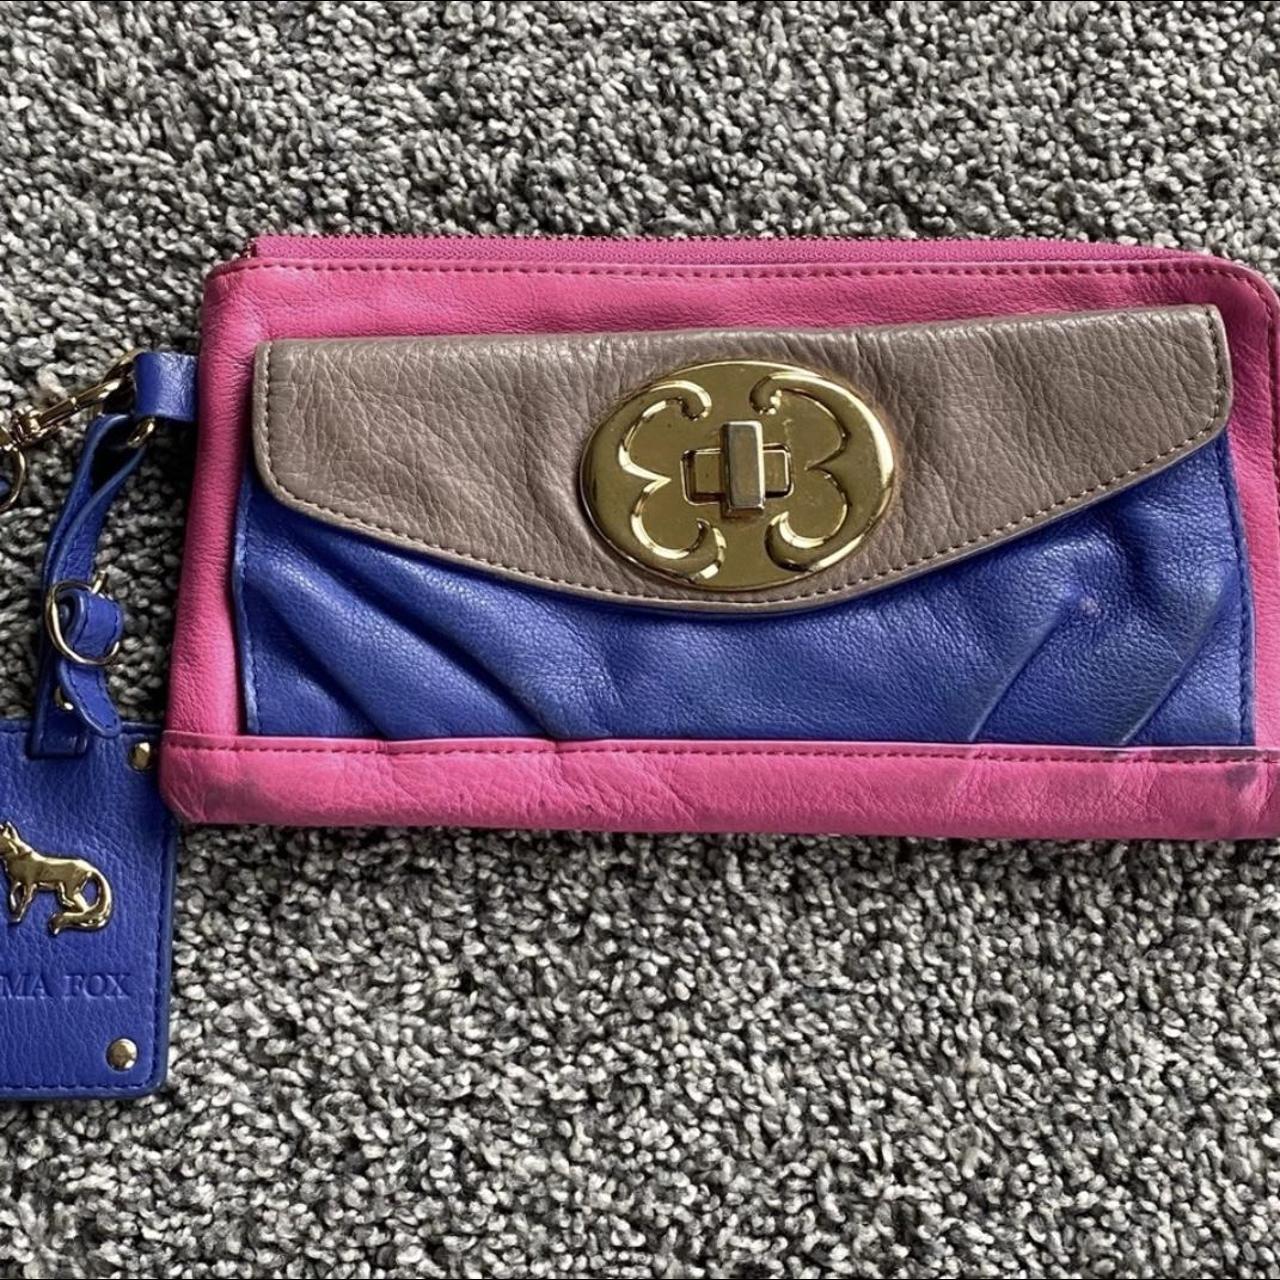 Emma Fox Bucket Leather Handbag Purse Purple Pink Tassels | eBay